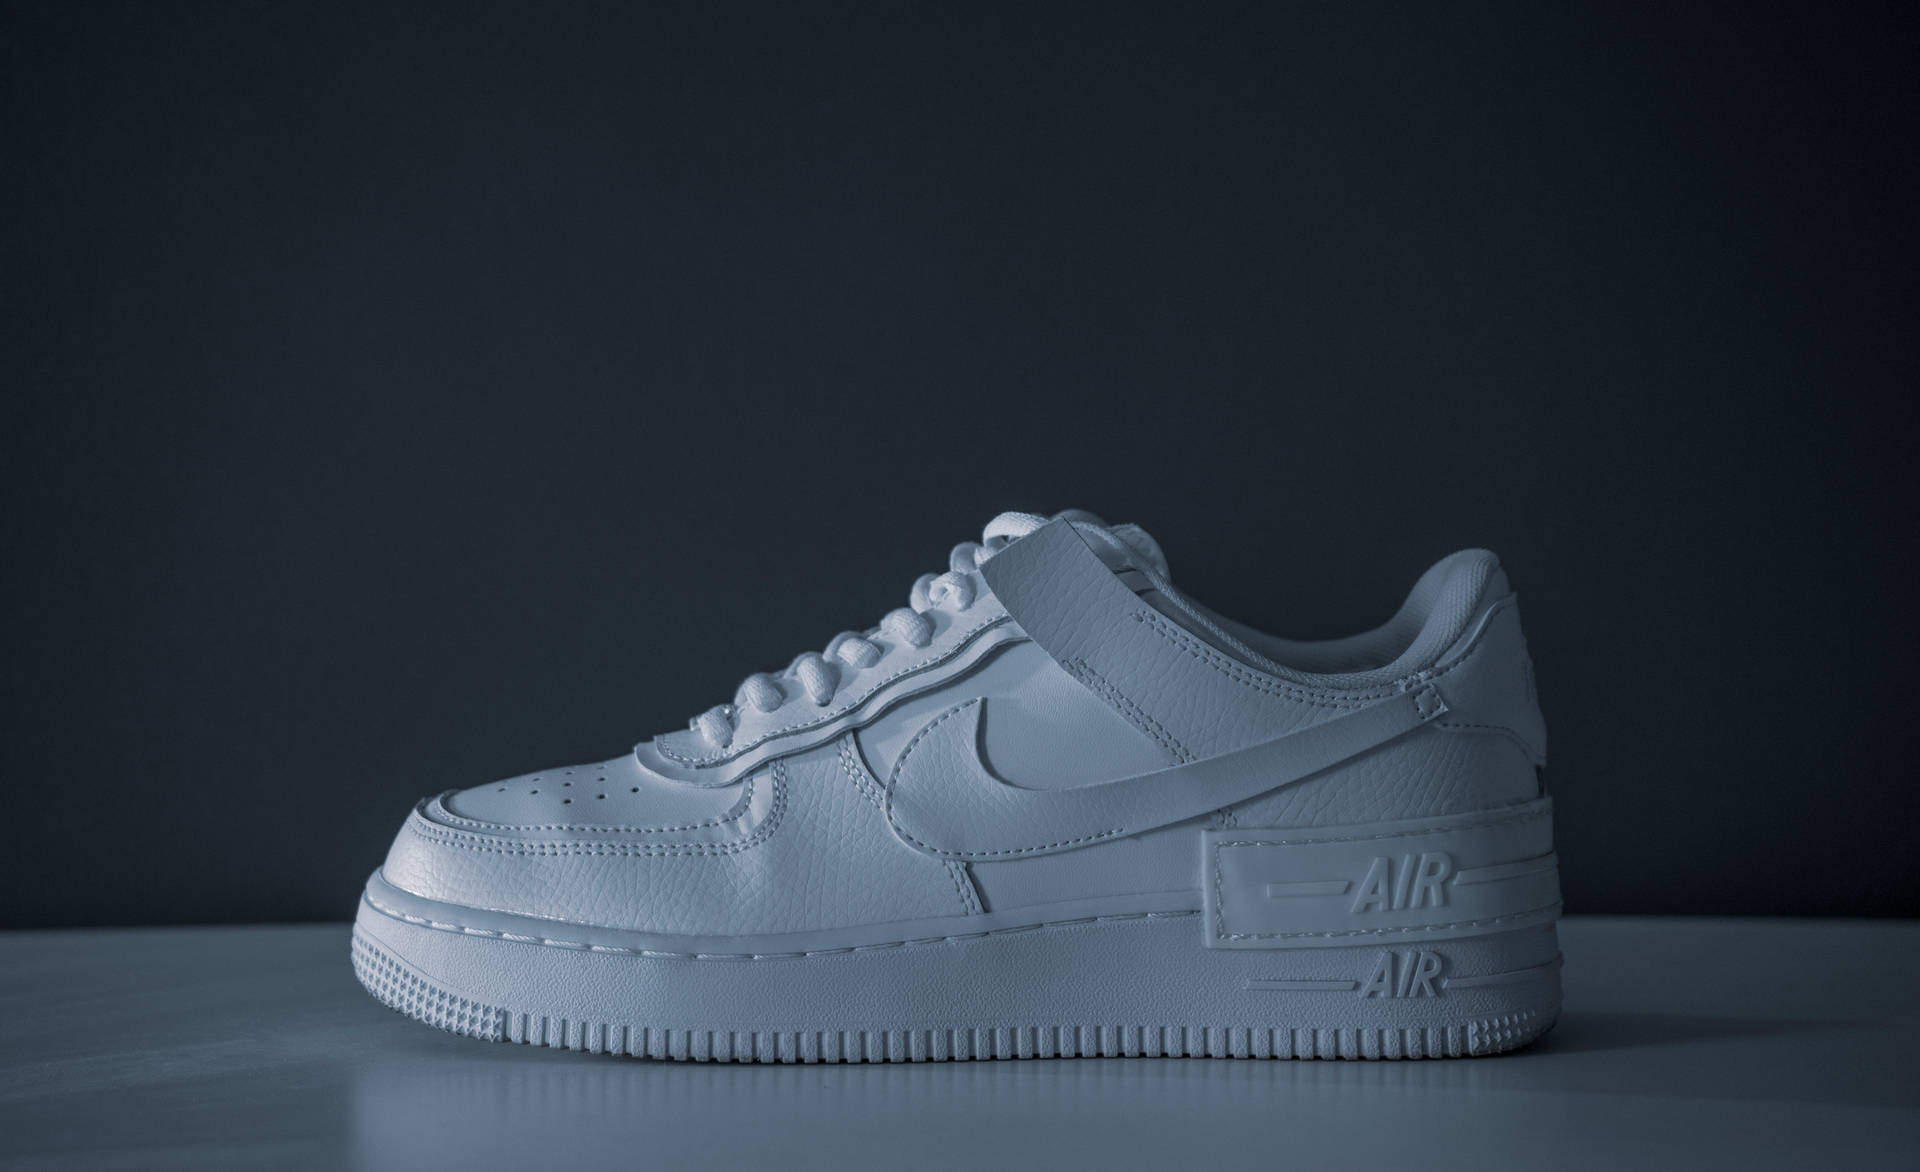 4k White Nike Air Shoe On Black Background